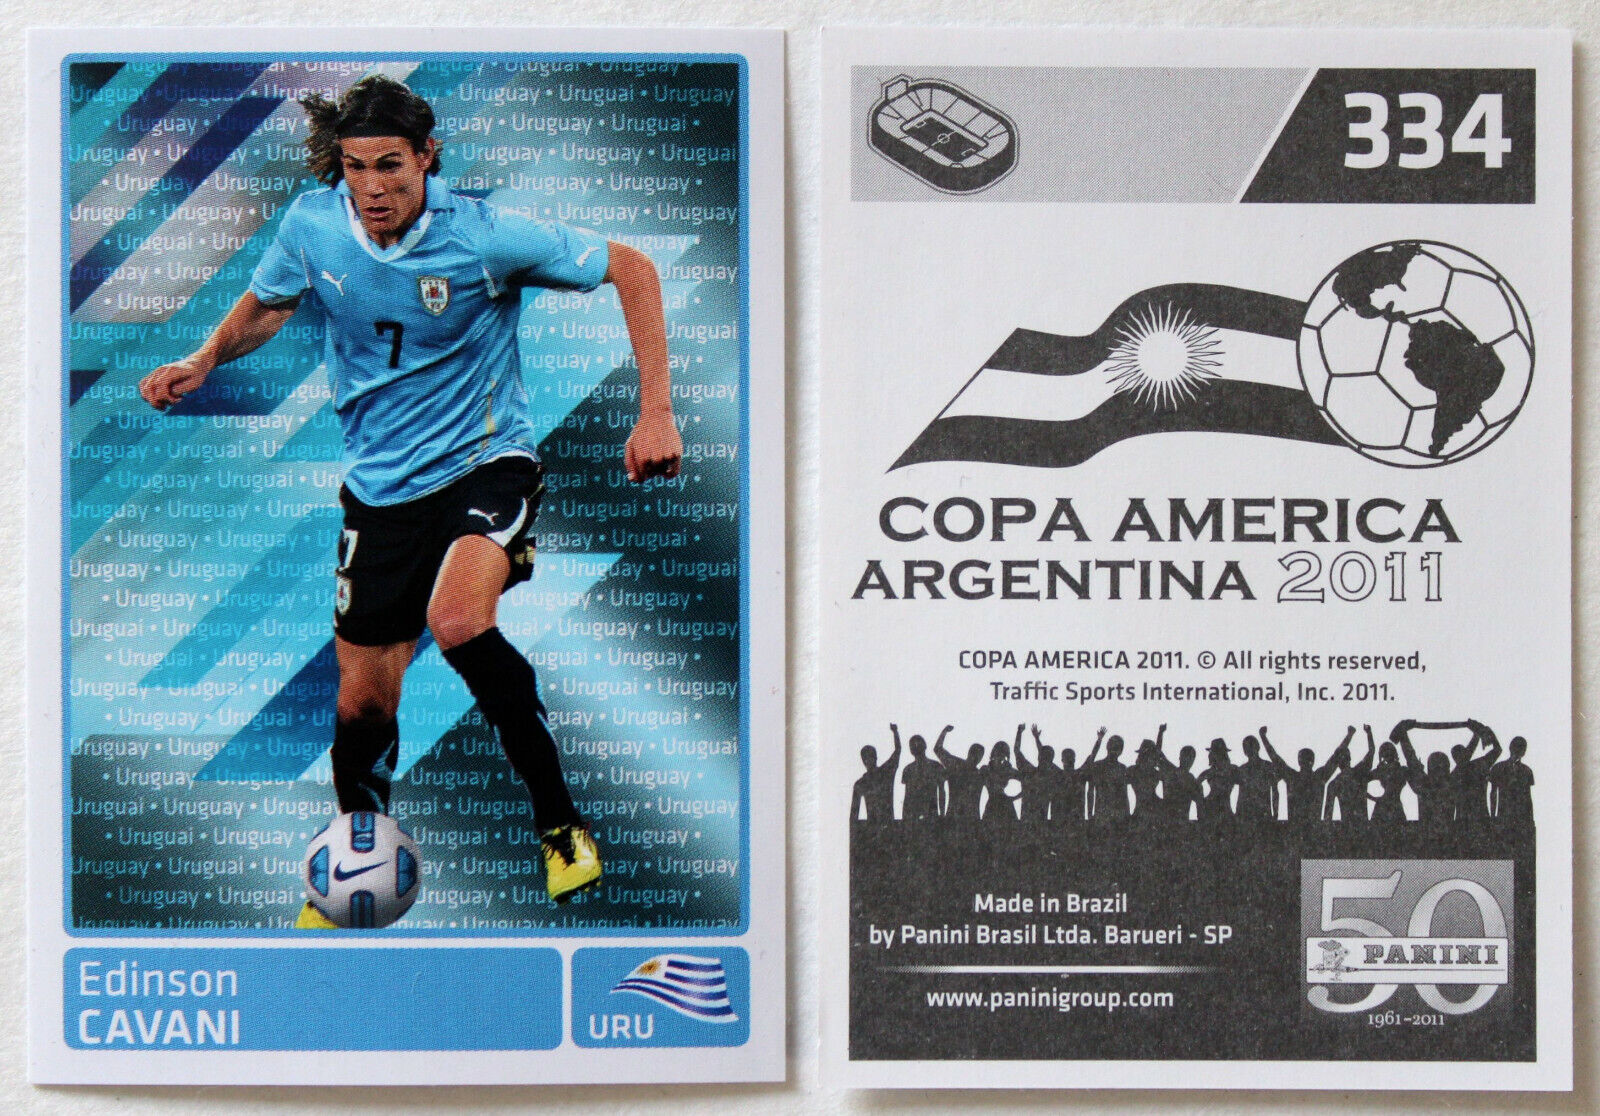 PANINI Soccer Sticker EDINSON CAVANI # 334 AMERICA CUP 2011 Star Player